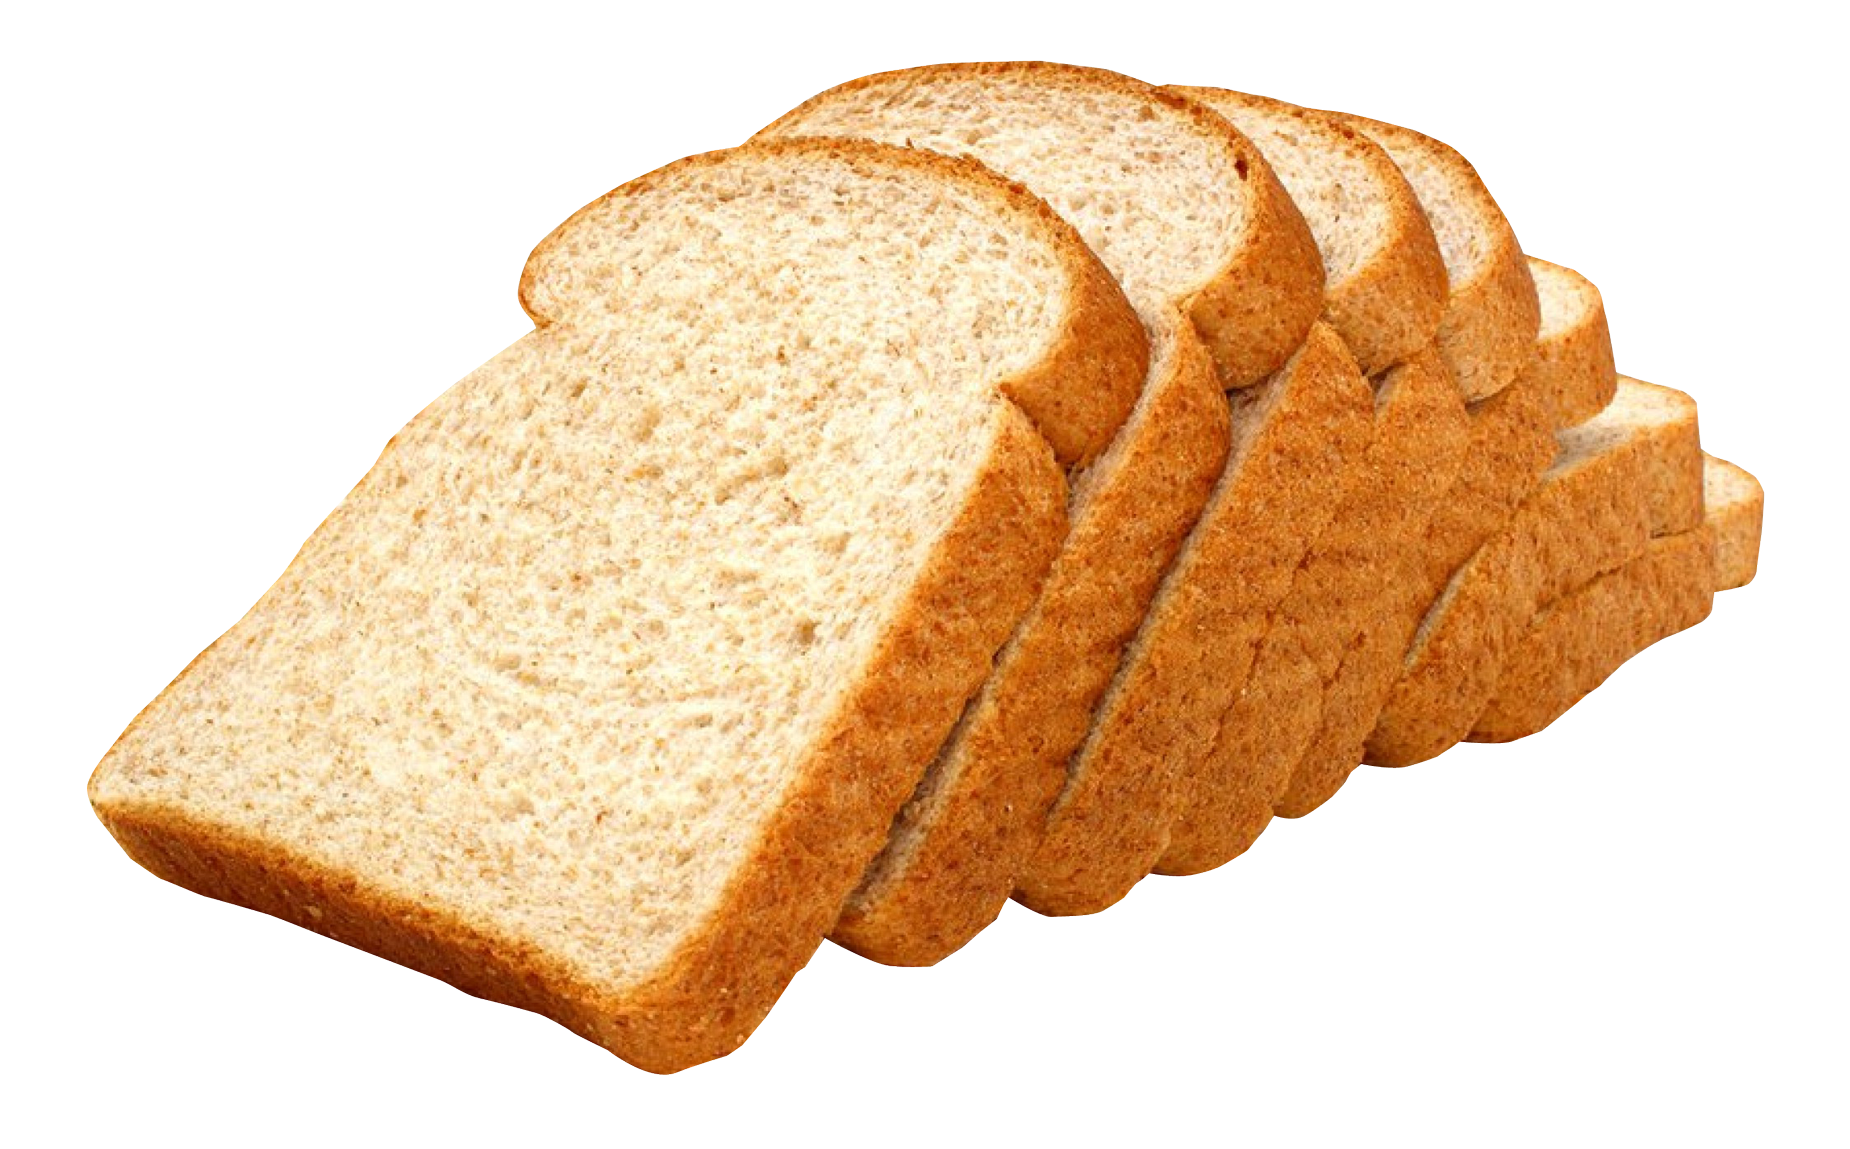 clipart bread transparent background